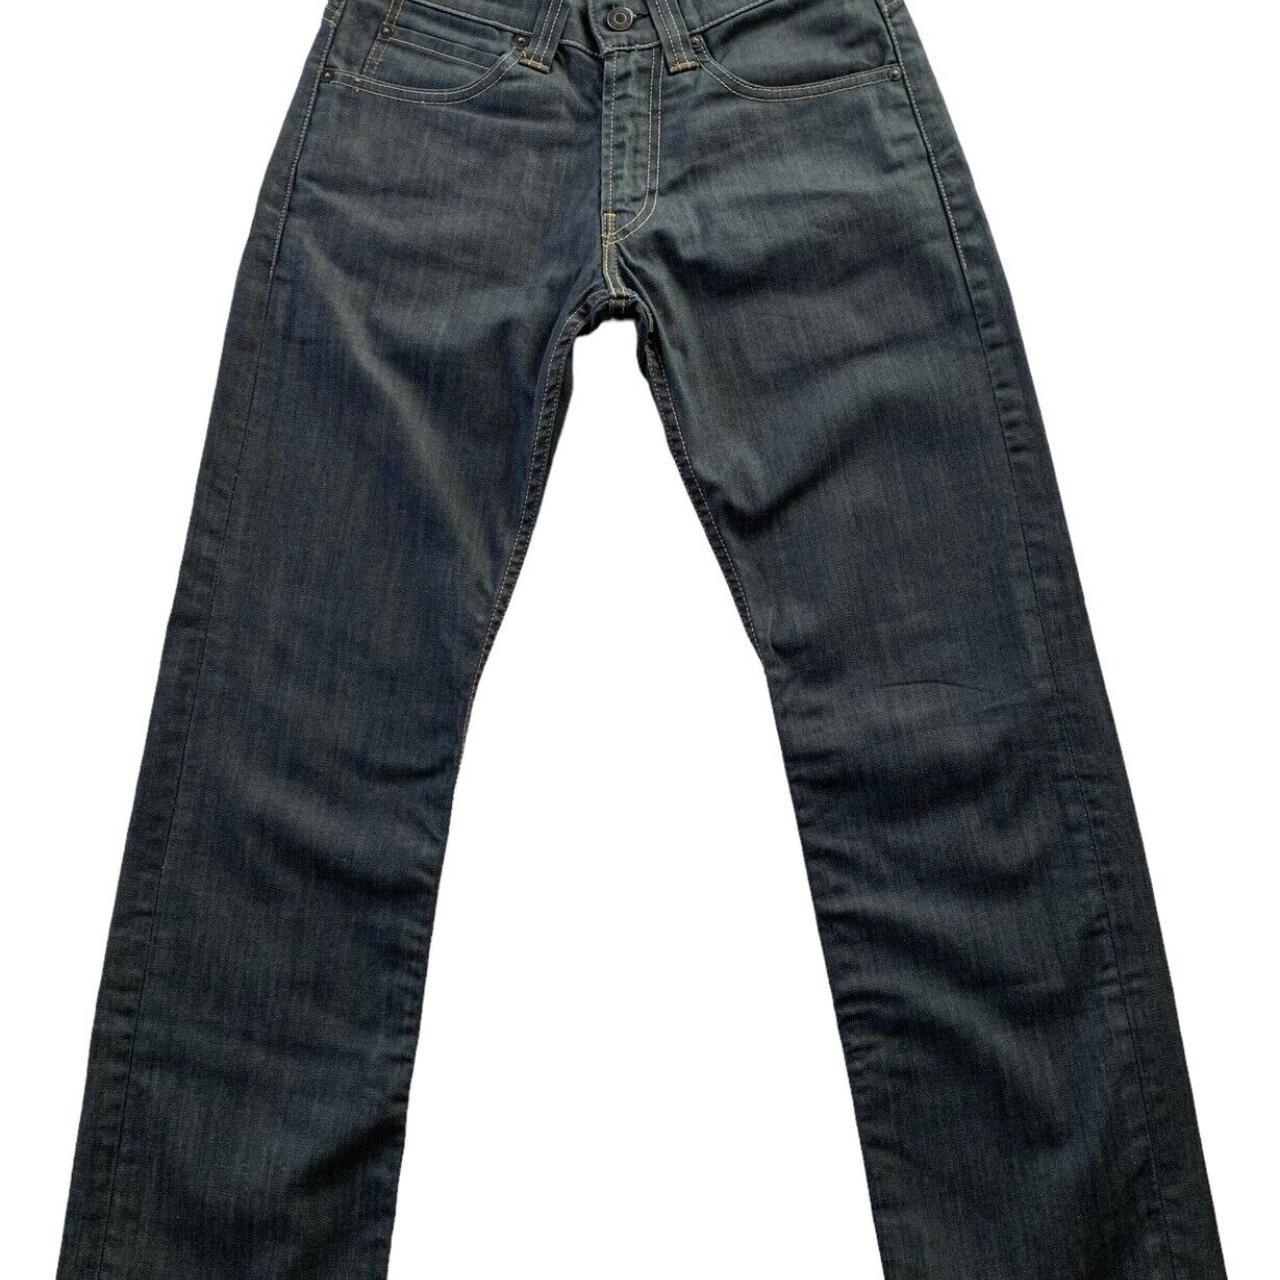 Levi,s 506 Standard Straight Leg Stretch Jeans 28